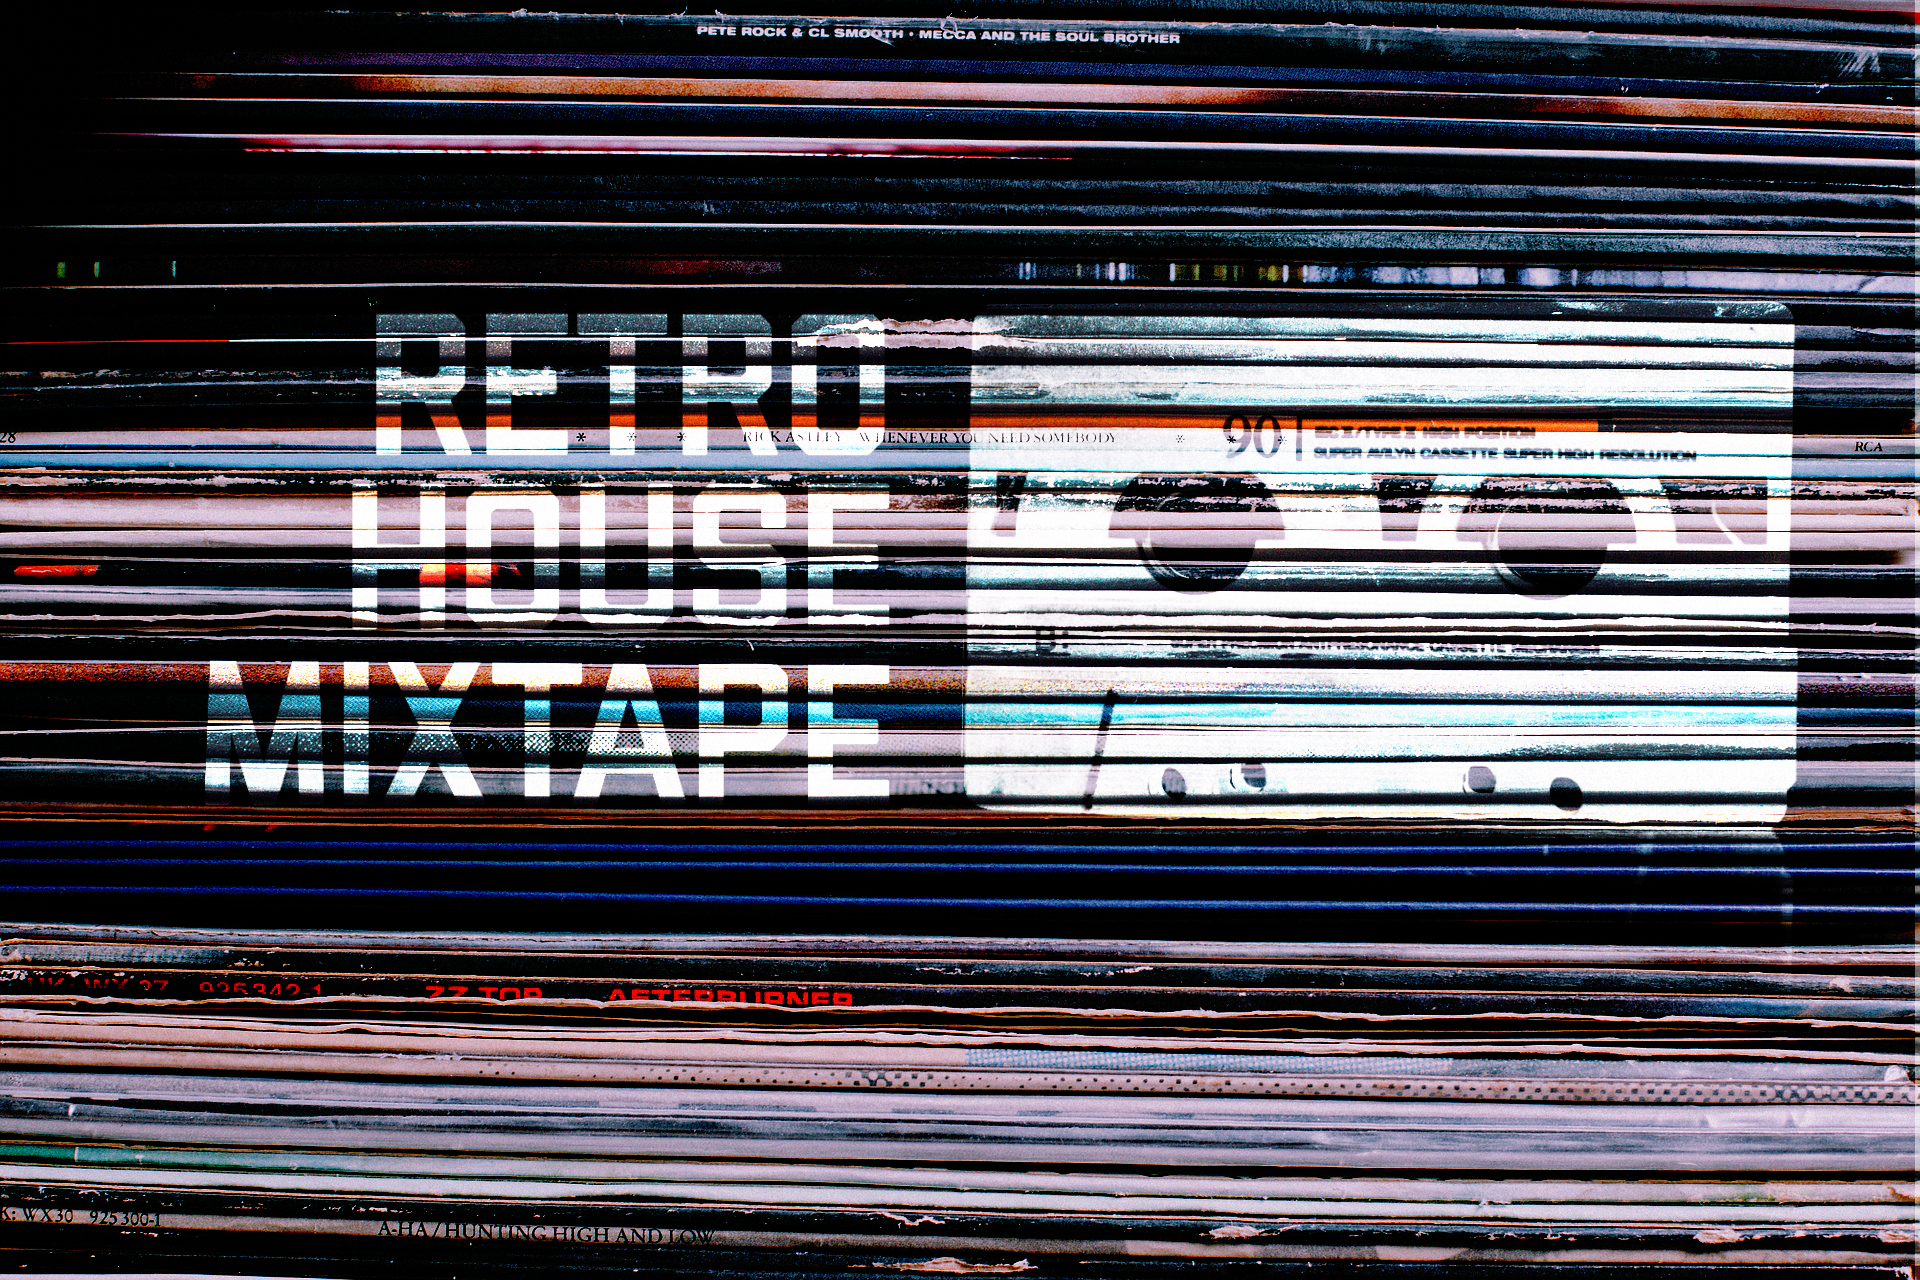 Retro House Mixtape Logo on Vinyl Records